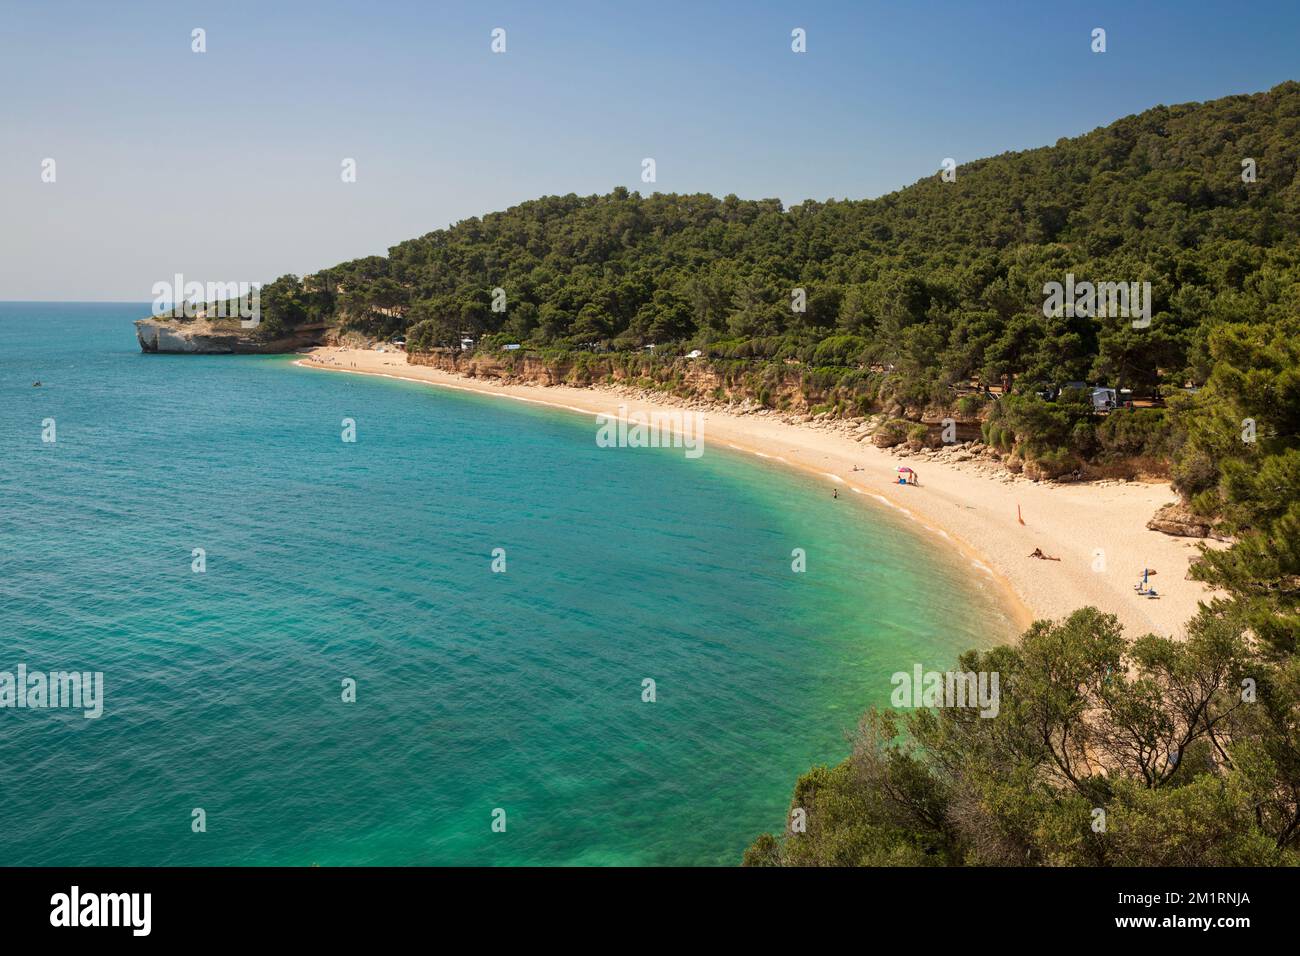 Plage de Spiaggia di Baia di Campi sur le promontoire Gargano, Pugnochiuso, province de Foggia, Puglia, Italie, Europe Banque D'Images